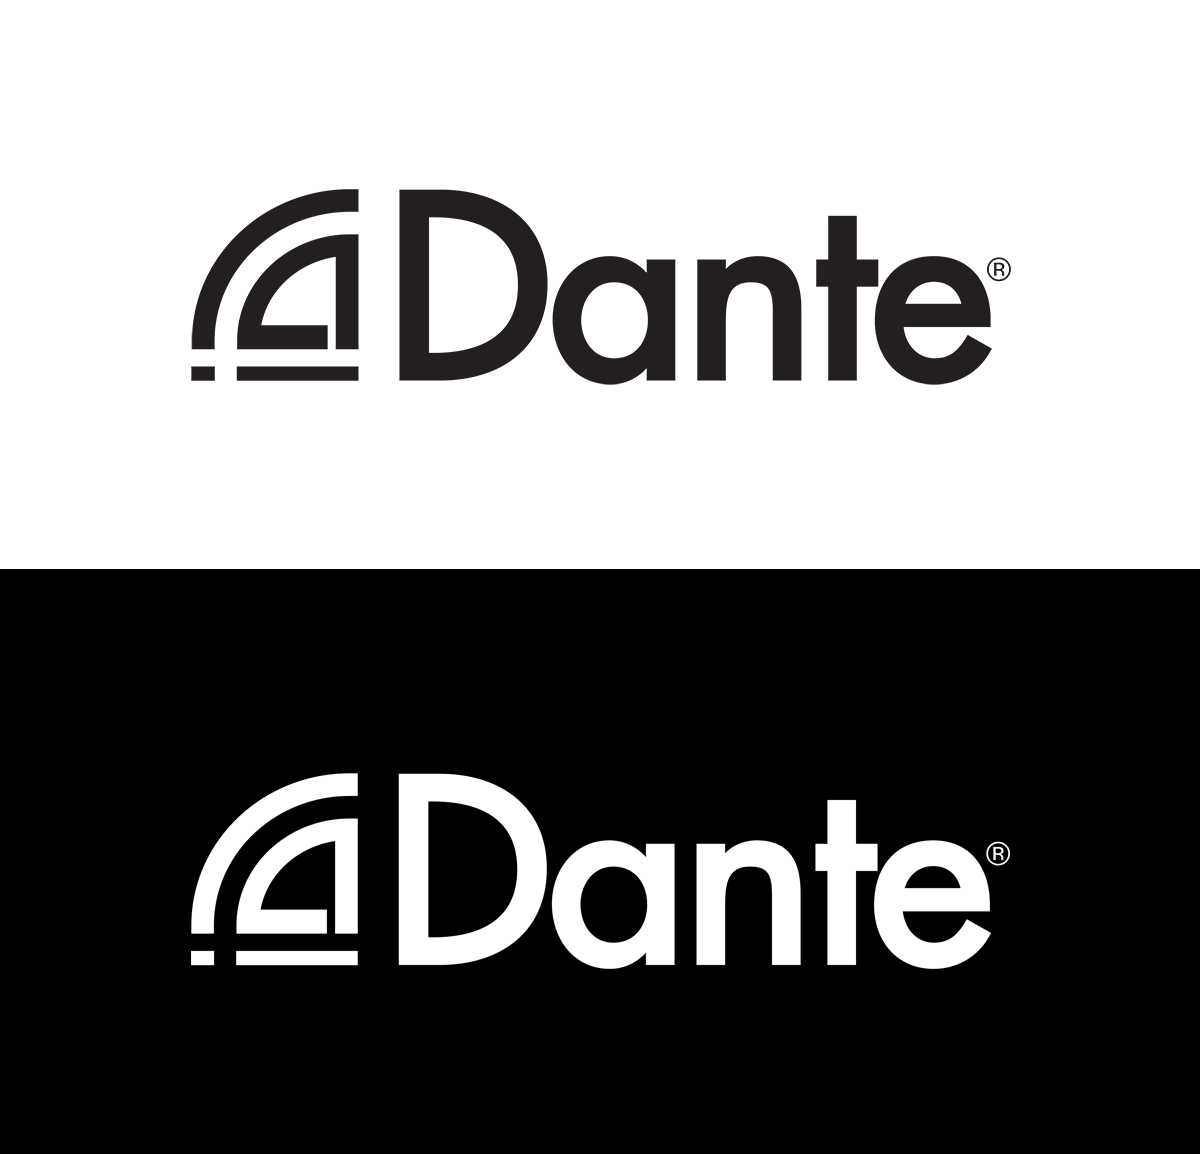 Dante_Logo_black_transBG_150px.png